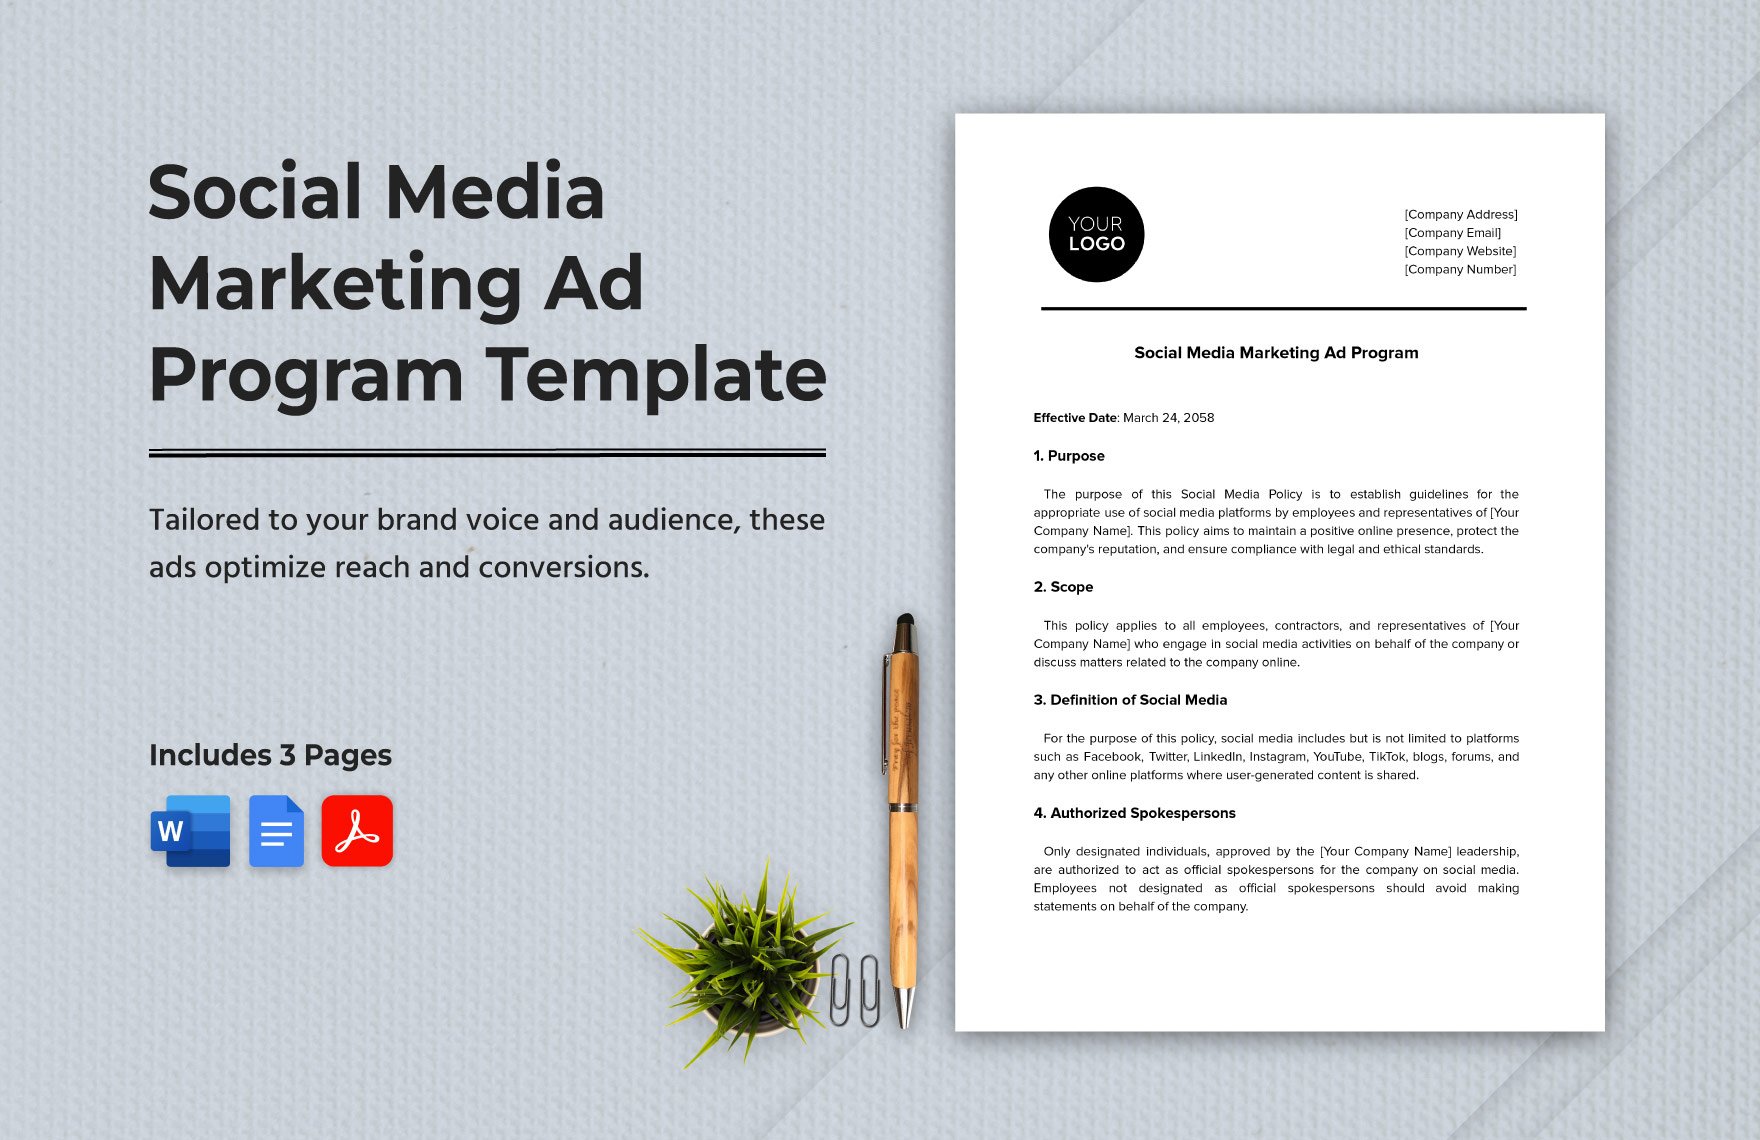 Social Media Marketing Ad Program Template in Word, Google Docs, PDF